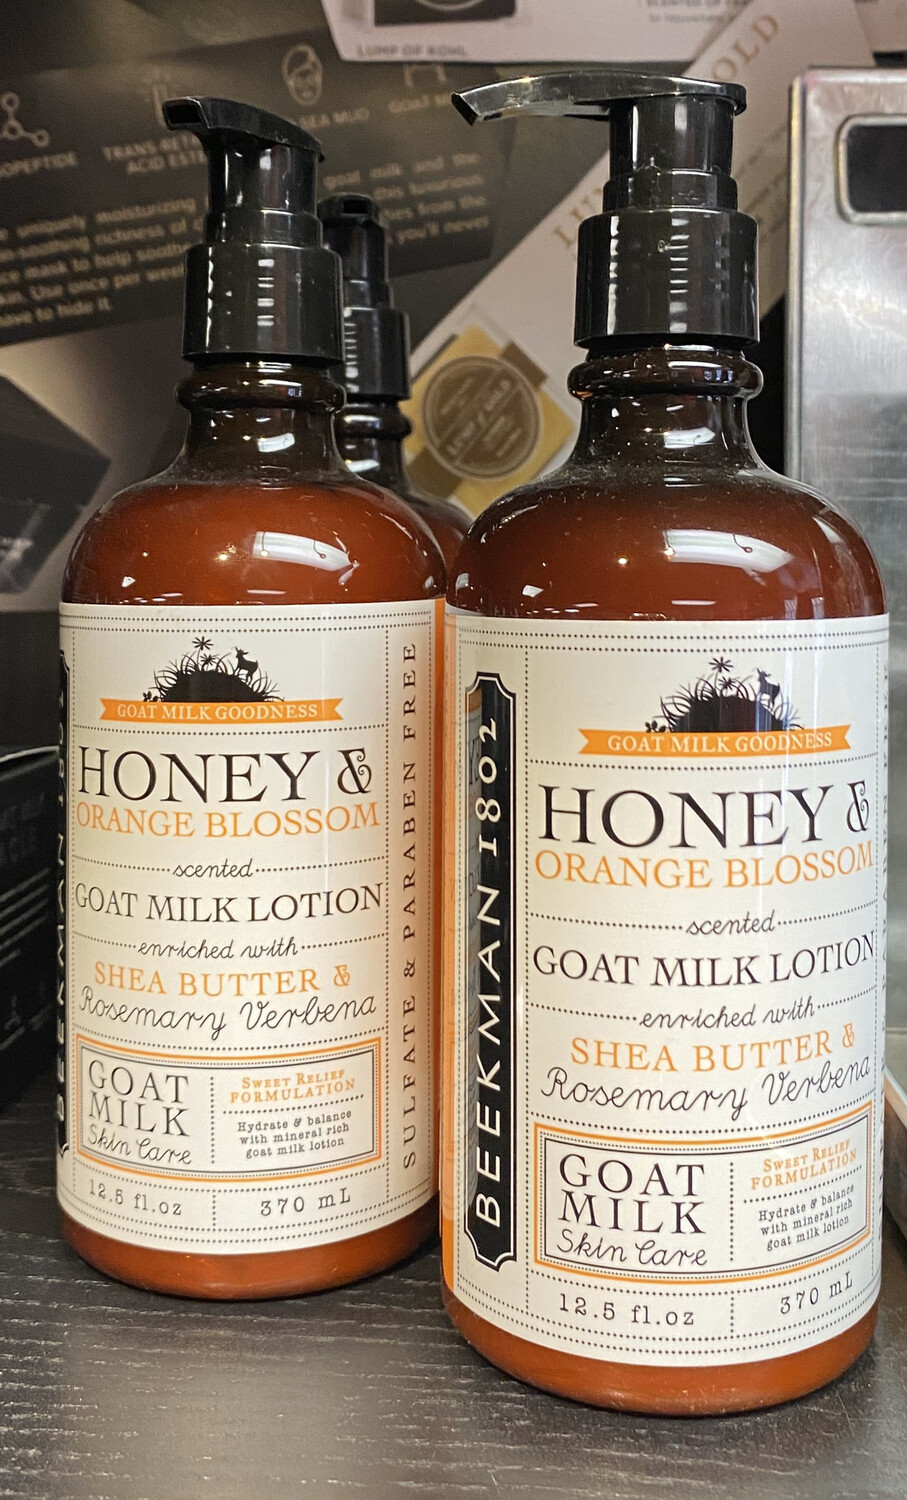 Beekman Honey & Orange Blossom Goat Milk Lotion. 12.5 oz Pump.